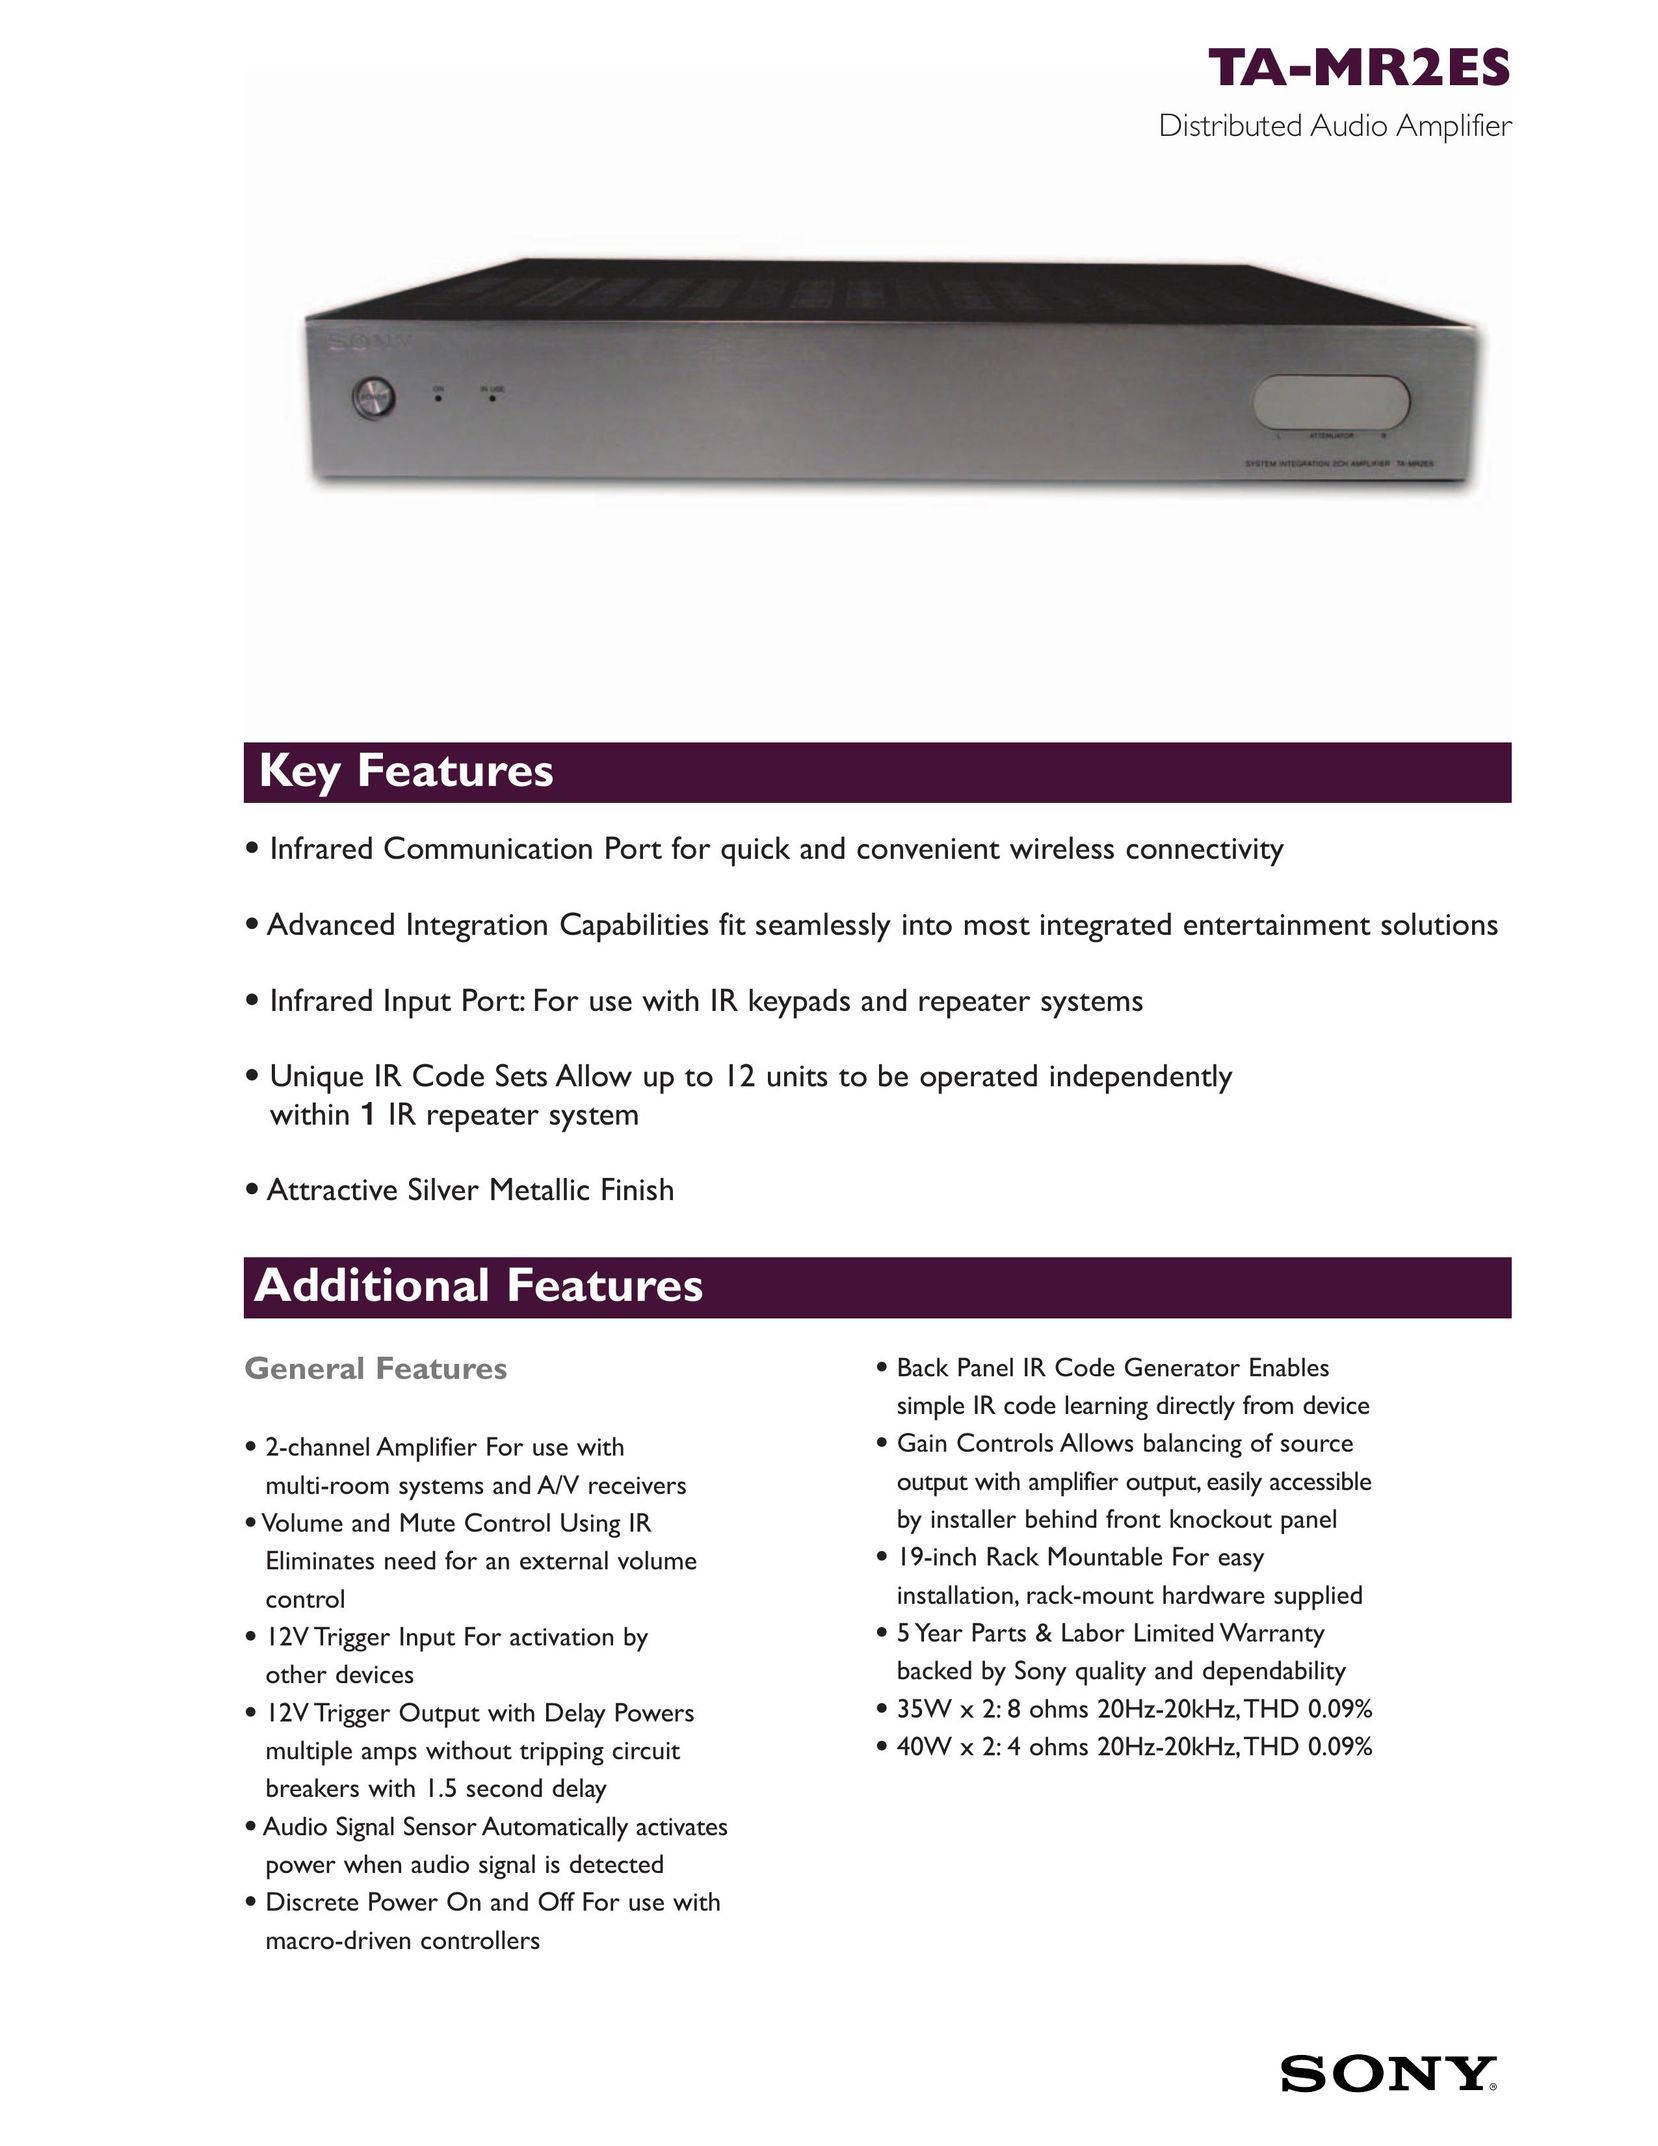 Sony TA-MR2ES Stereo Amplifier User Manual